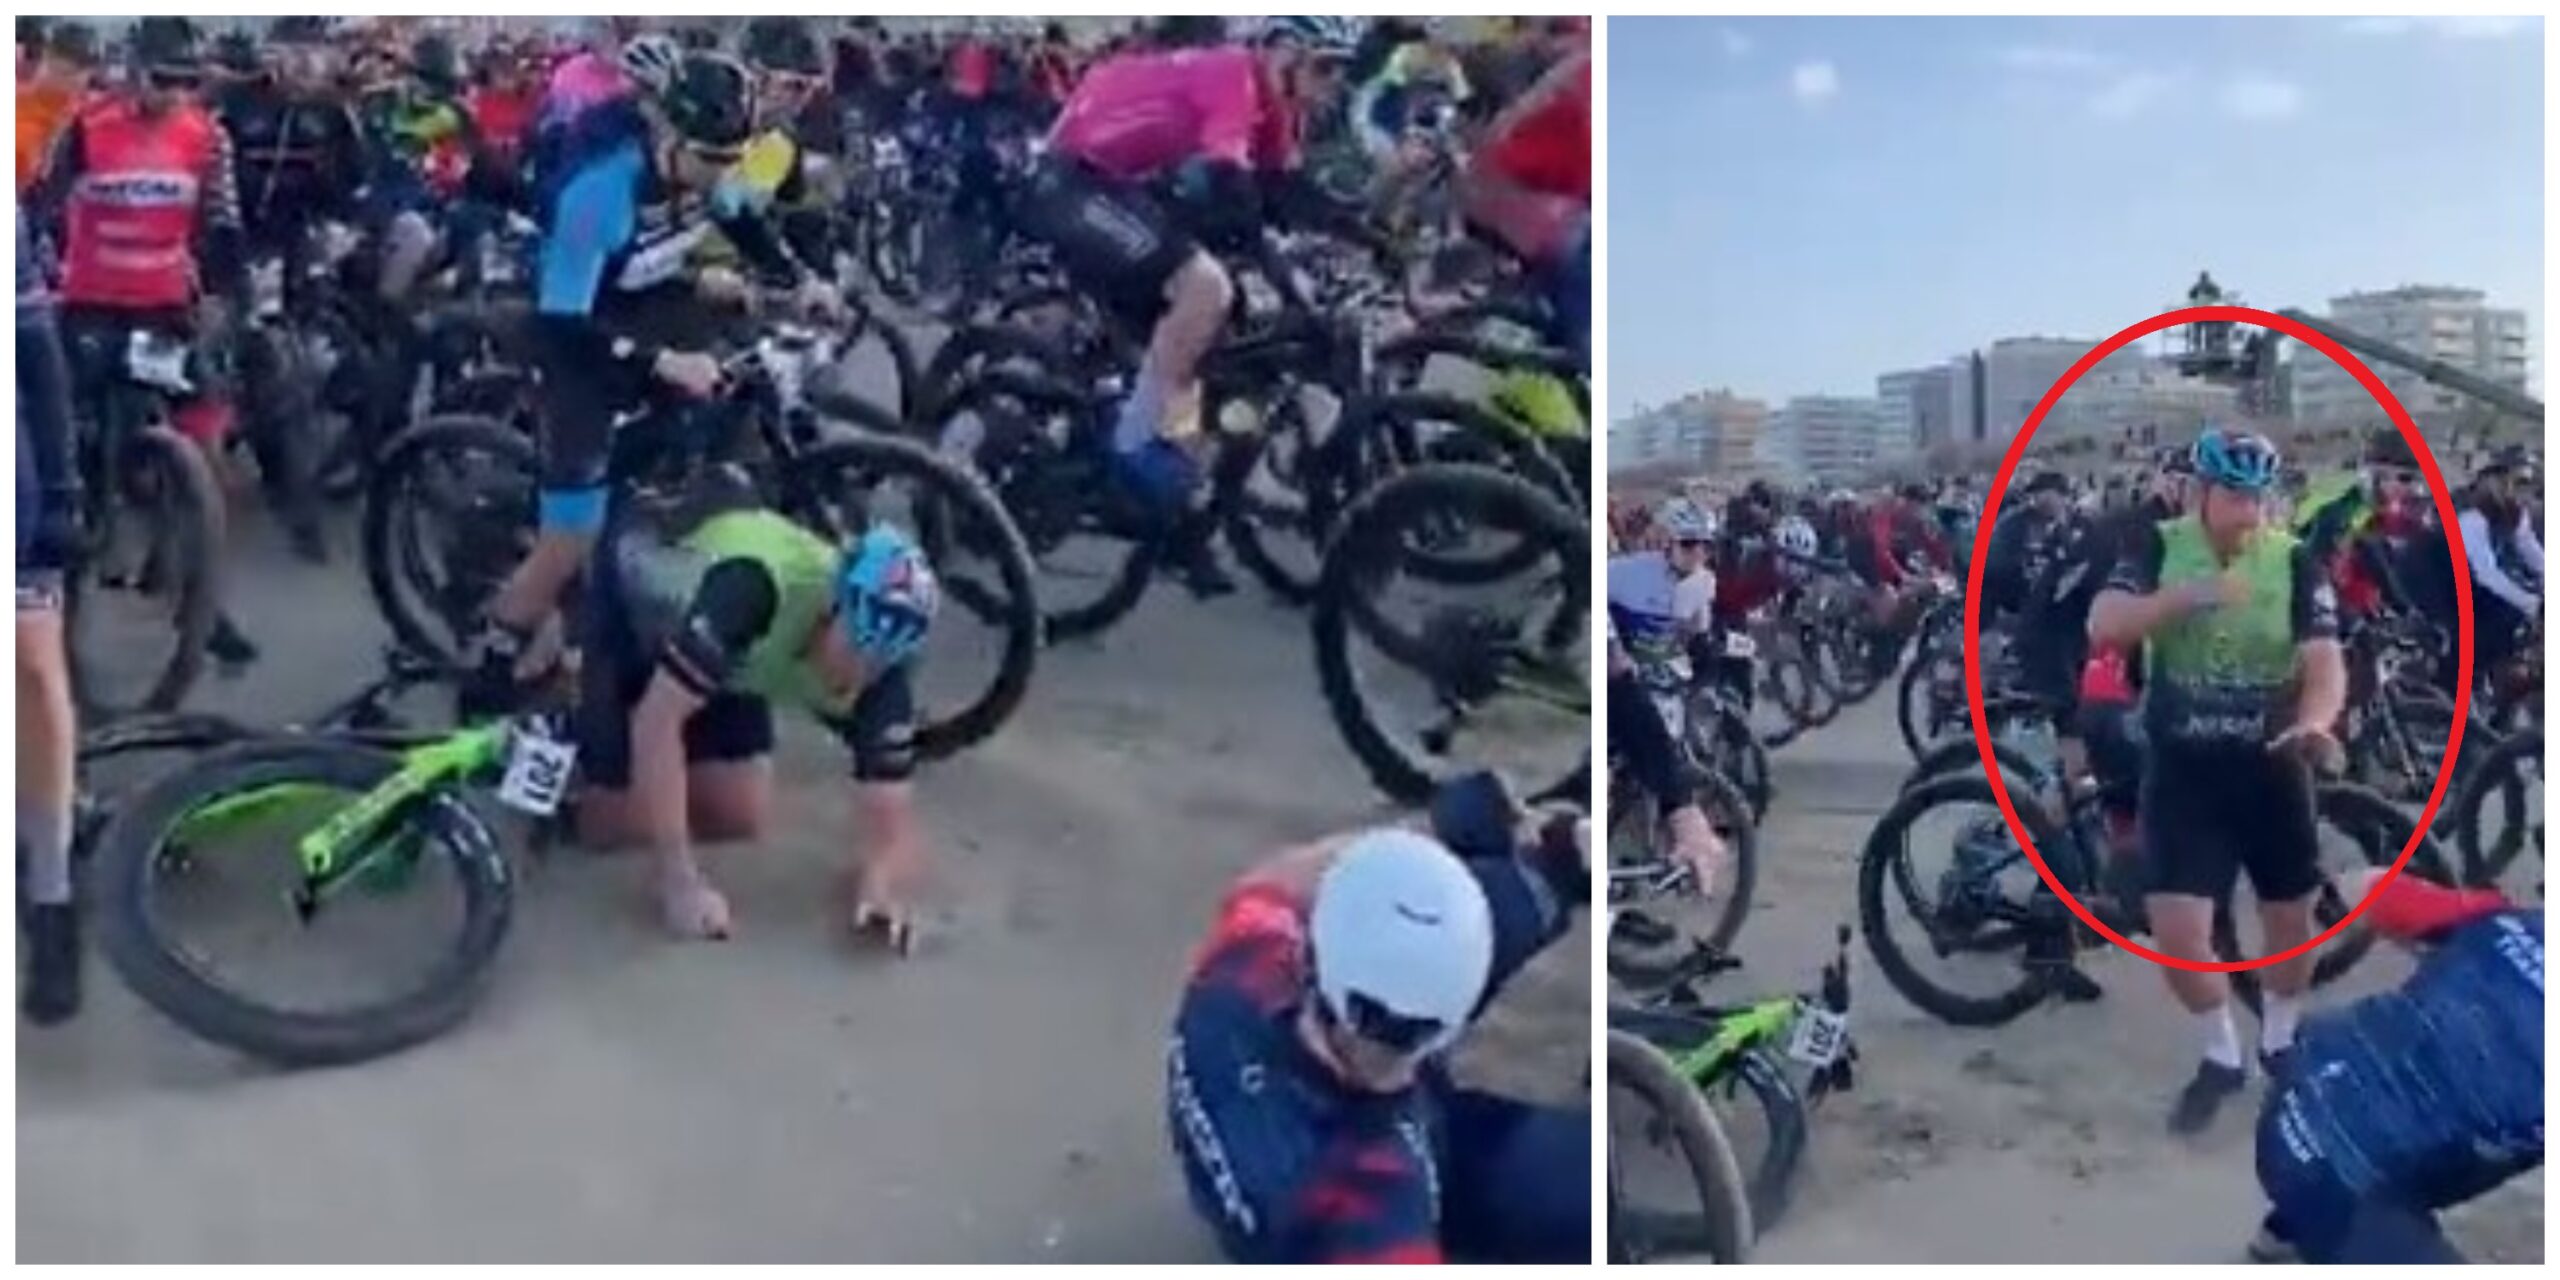 Rider assaults rival after crash at beach race in Belgium | Video